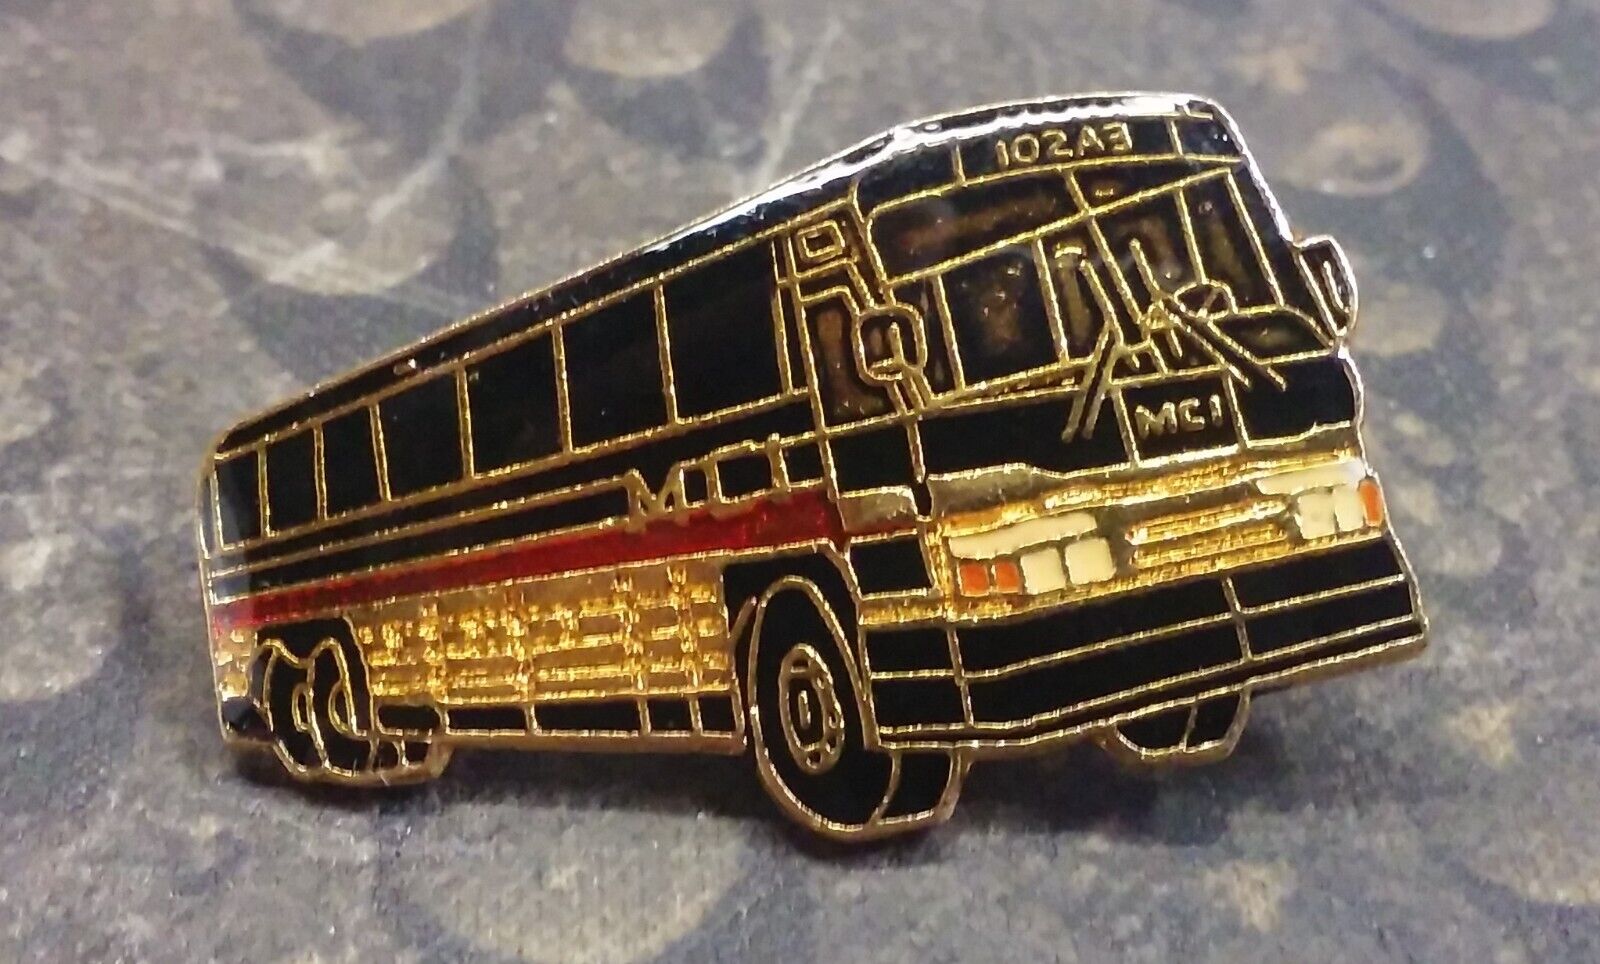 Motor Coach Industries MCI bus vintage tie tack pin badge Model 102 A3